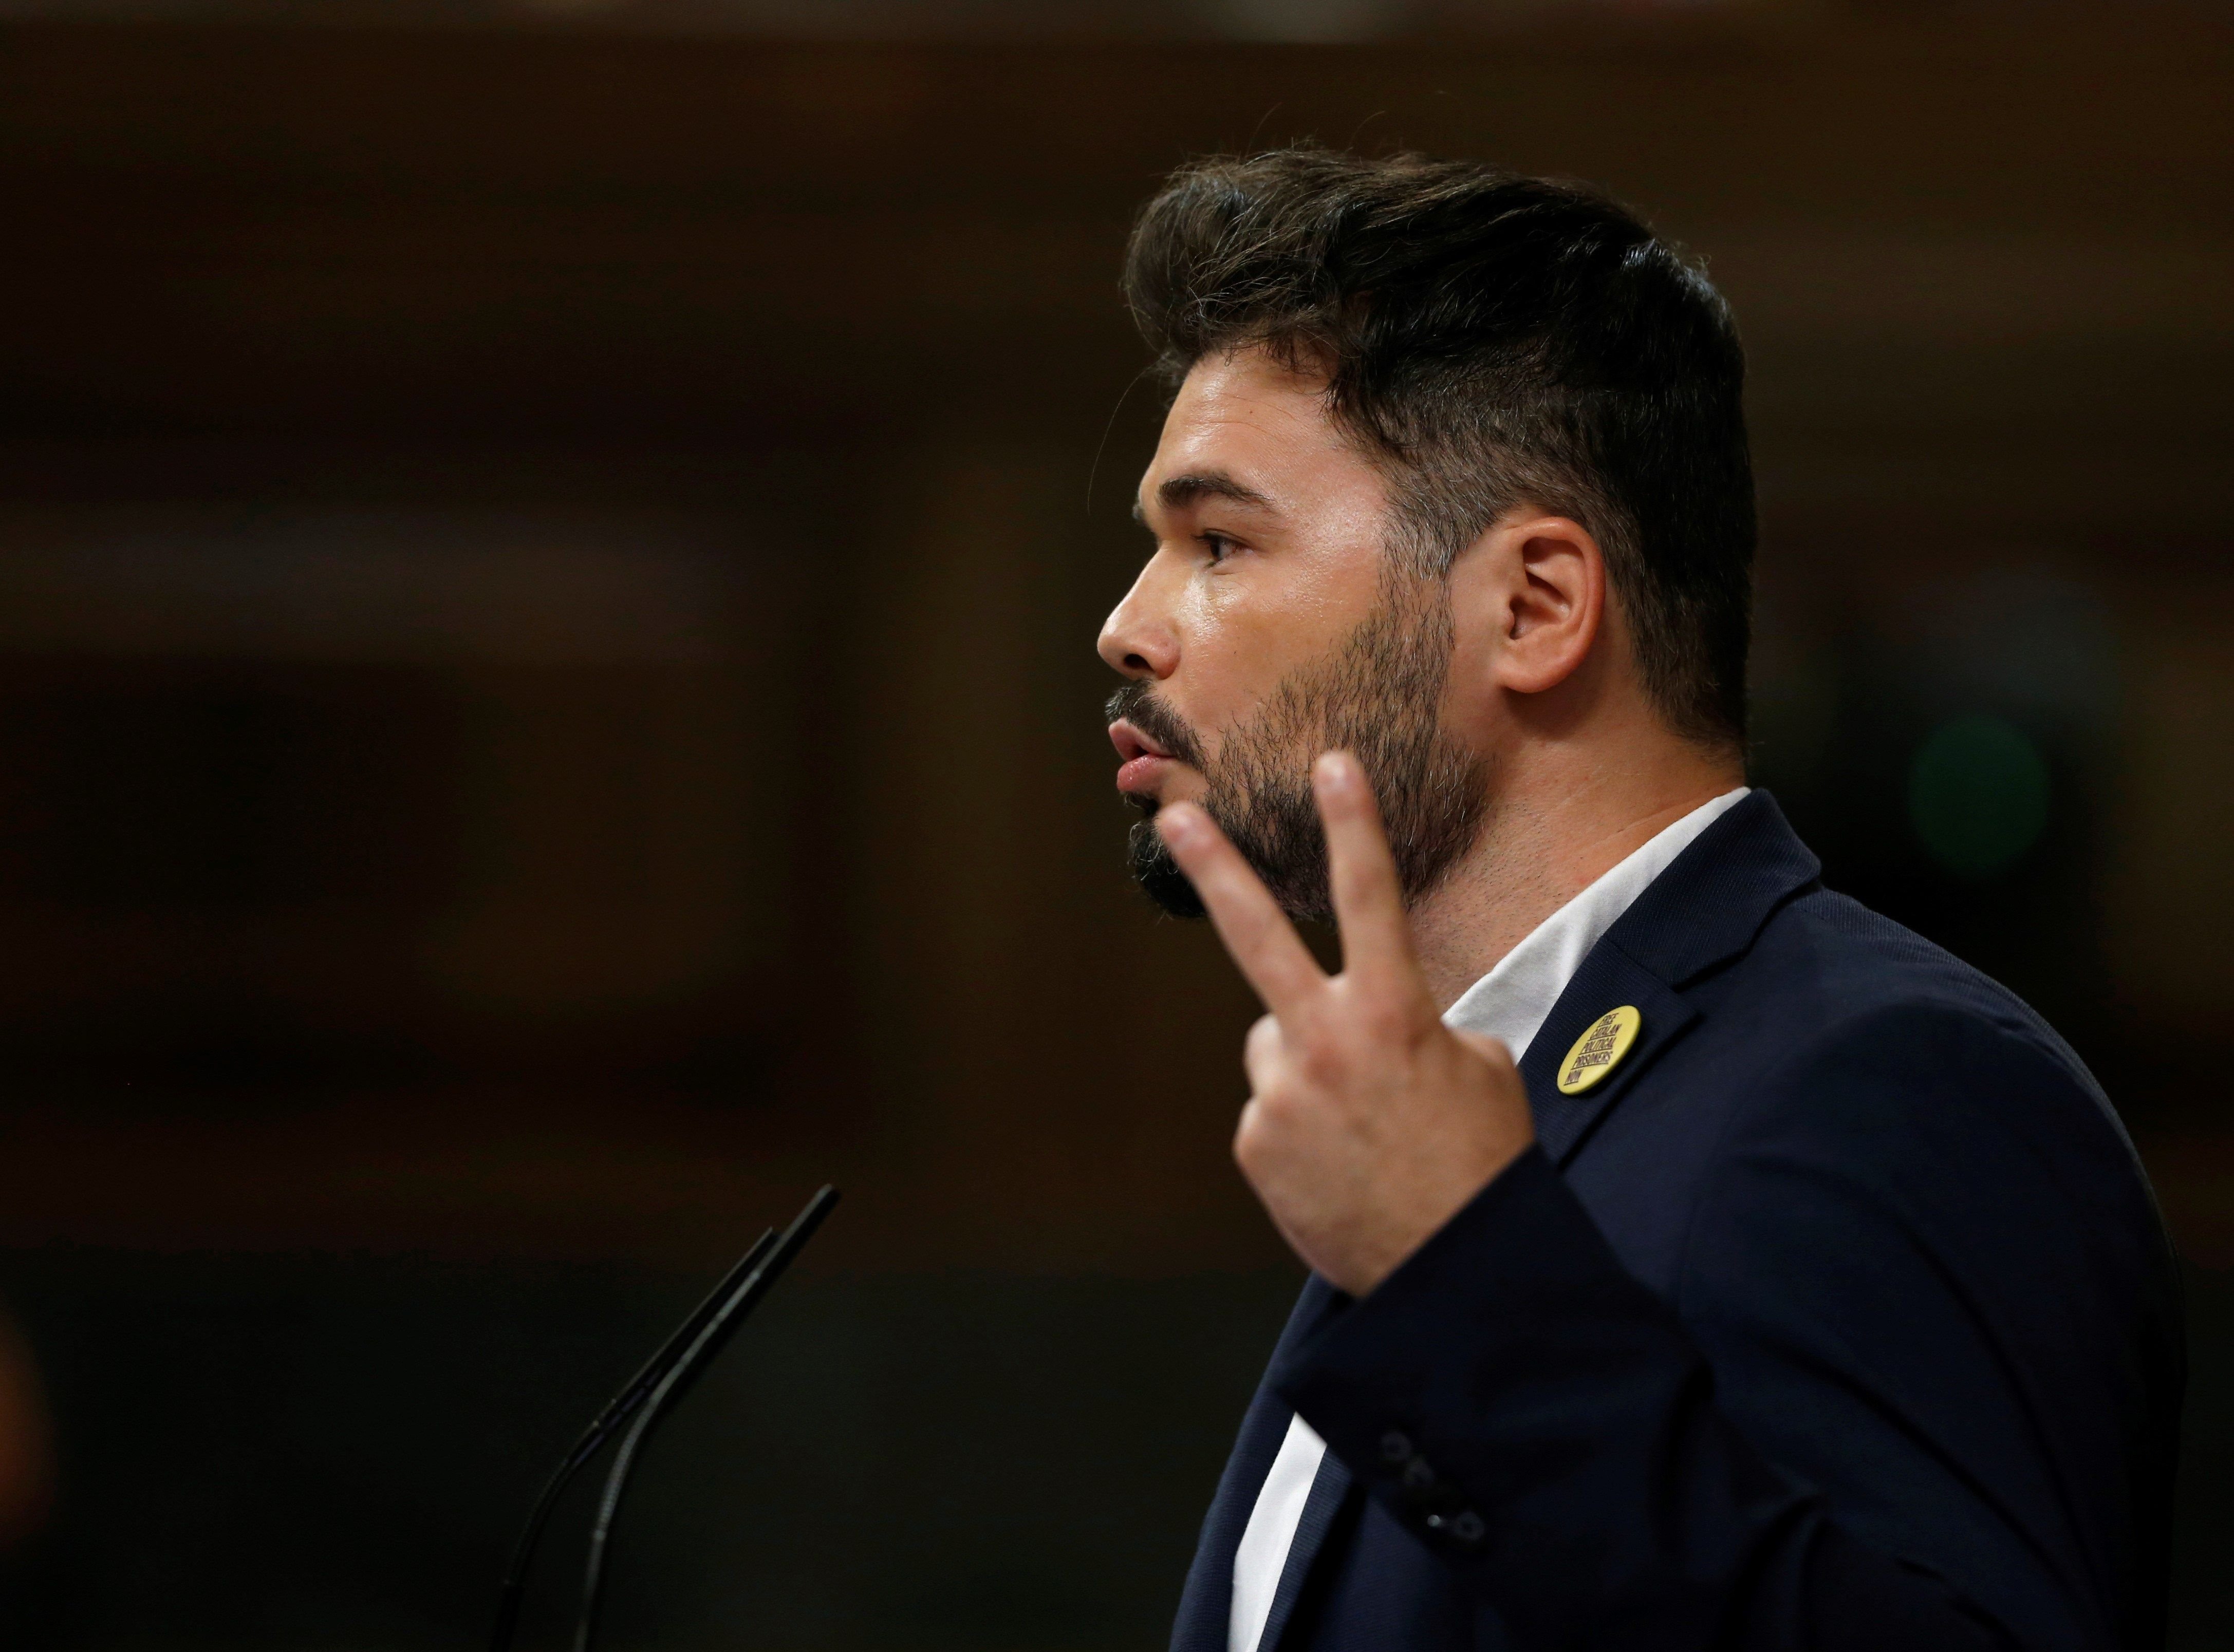 Catalan politician Rufián says "irresponsible" Sánchez "can still save the situation"